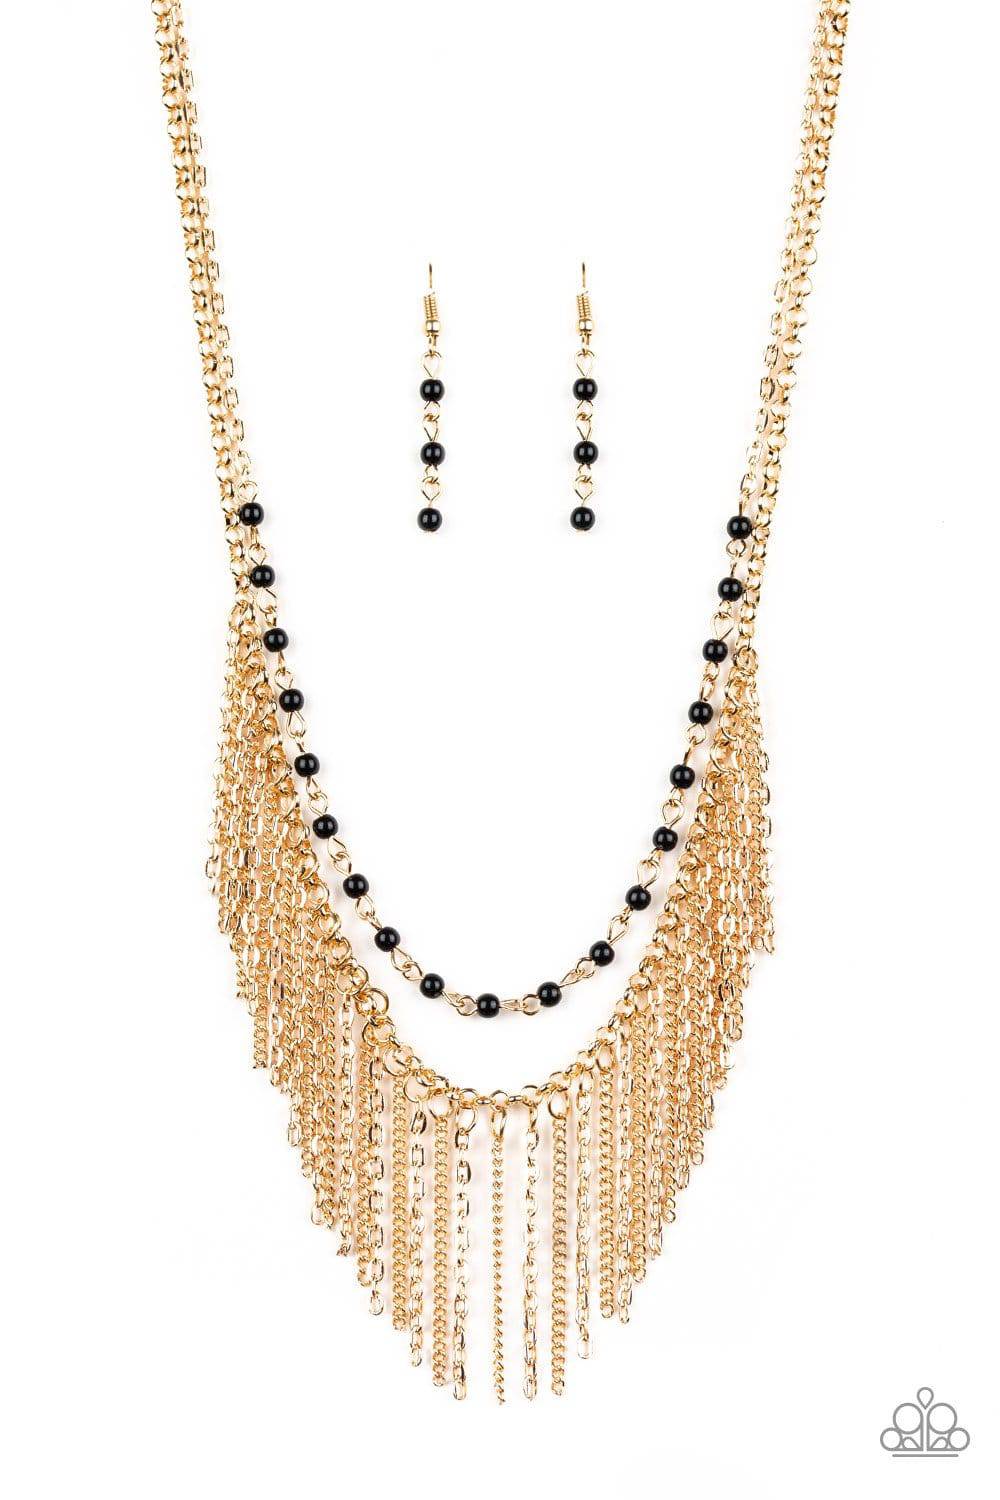 Fierce In Fringe - Gold & Dainty Black Bead Fringe Necklace - Paparazzi Accessories - GlaMarous Titi Jewels